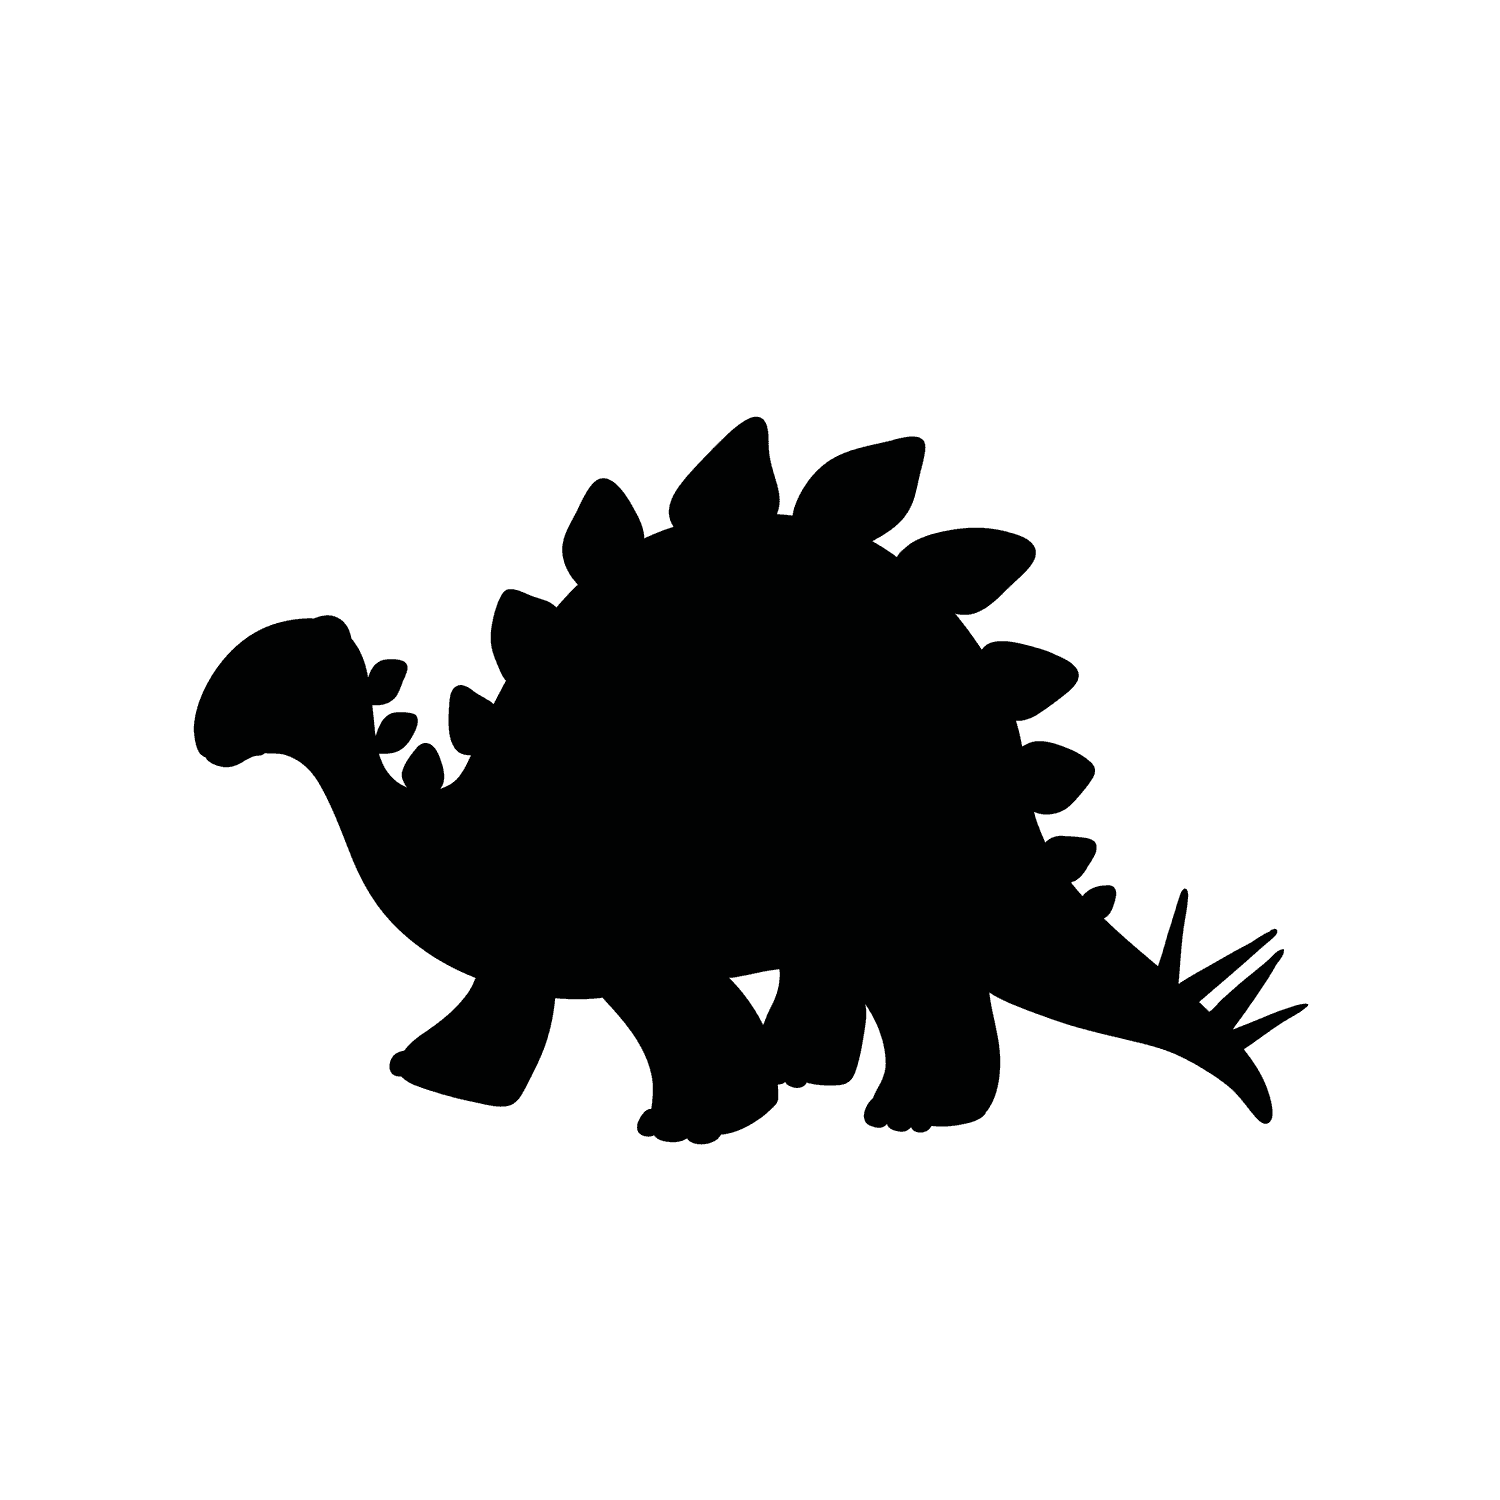 cartoon dinosaur character silhouette